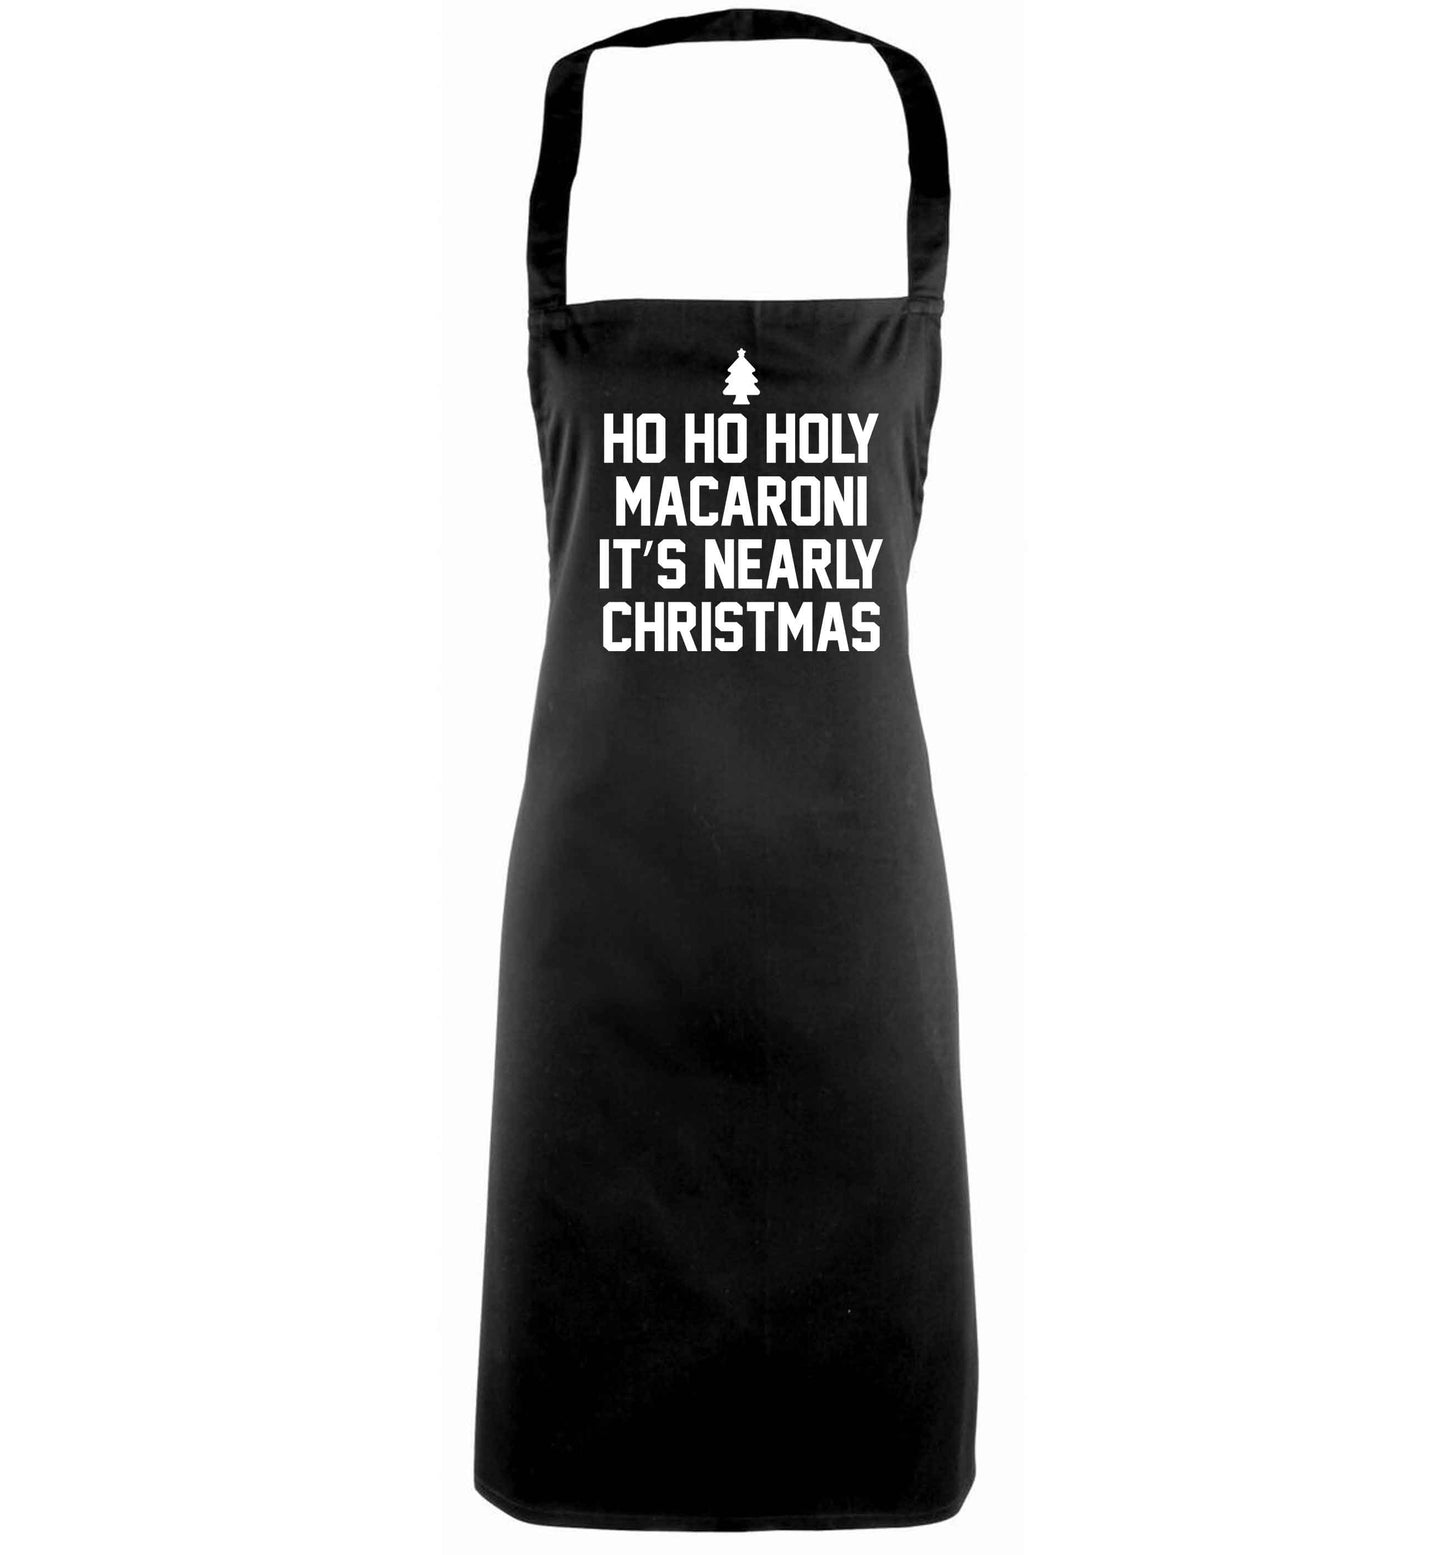 Ho ho holy macaroni it's nearly Christmas black apron